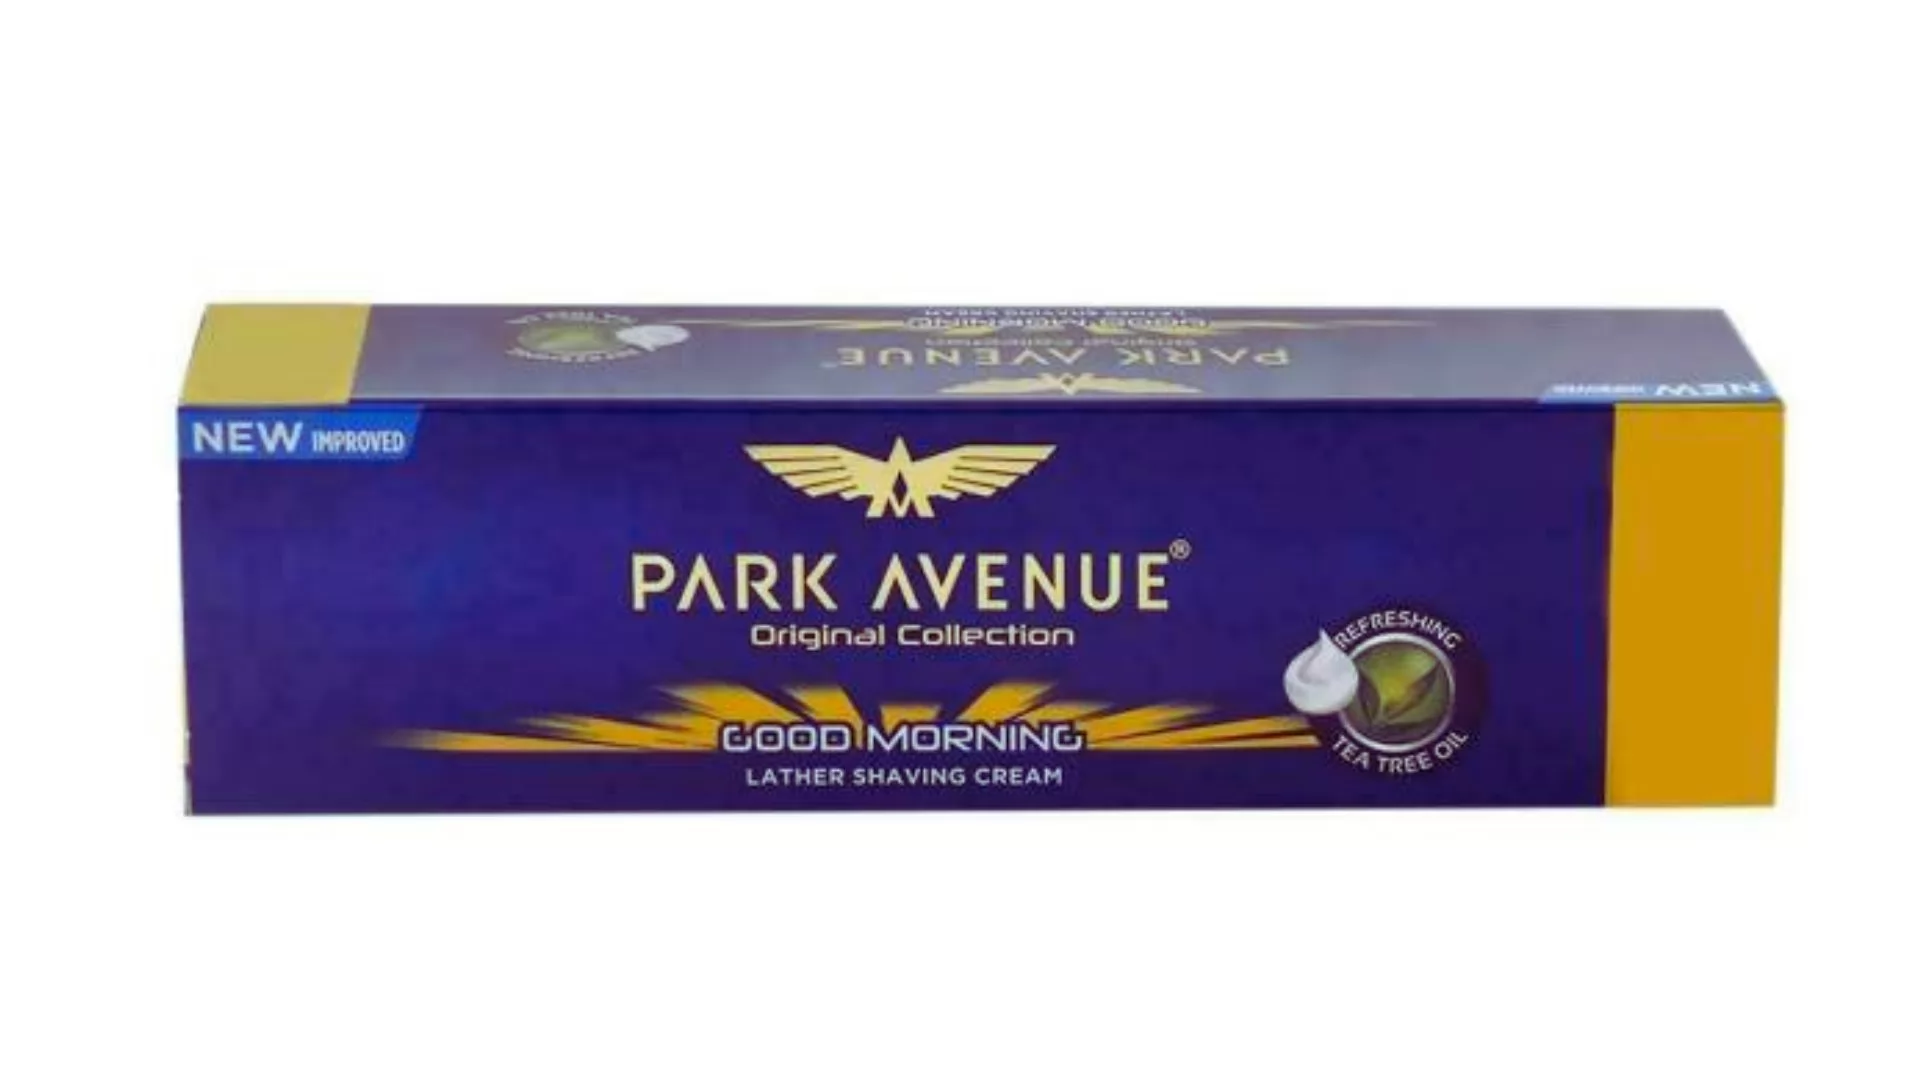 Park Avenue Good Morning shaving cream